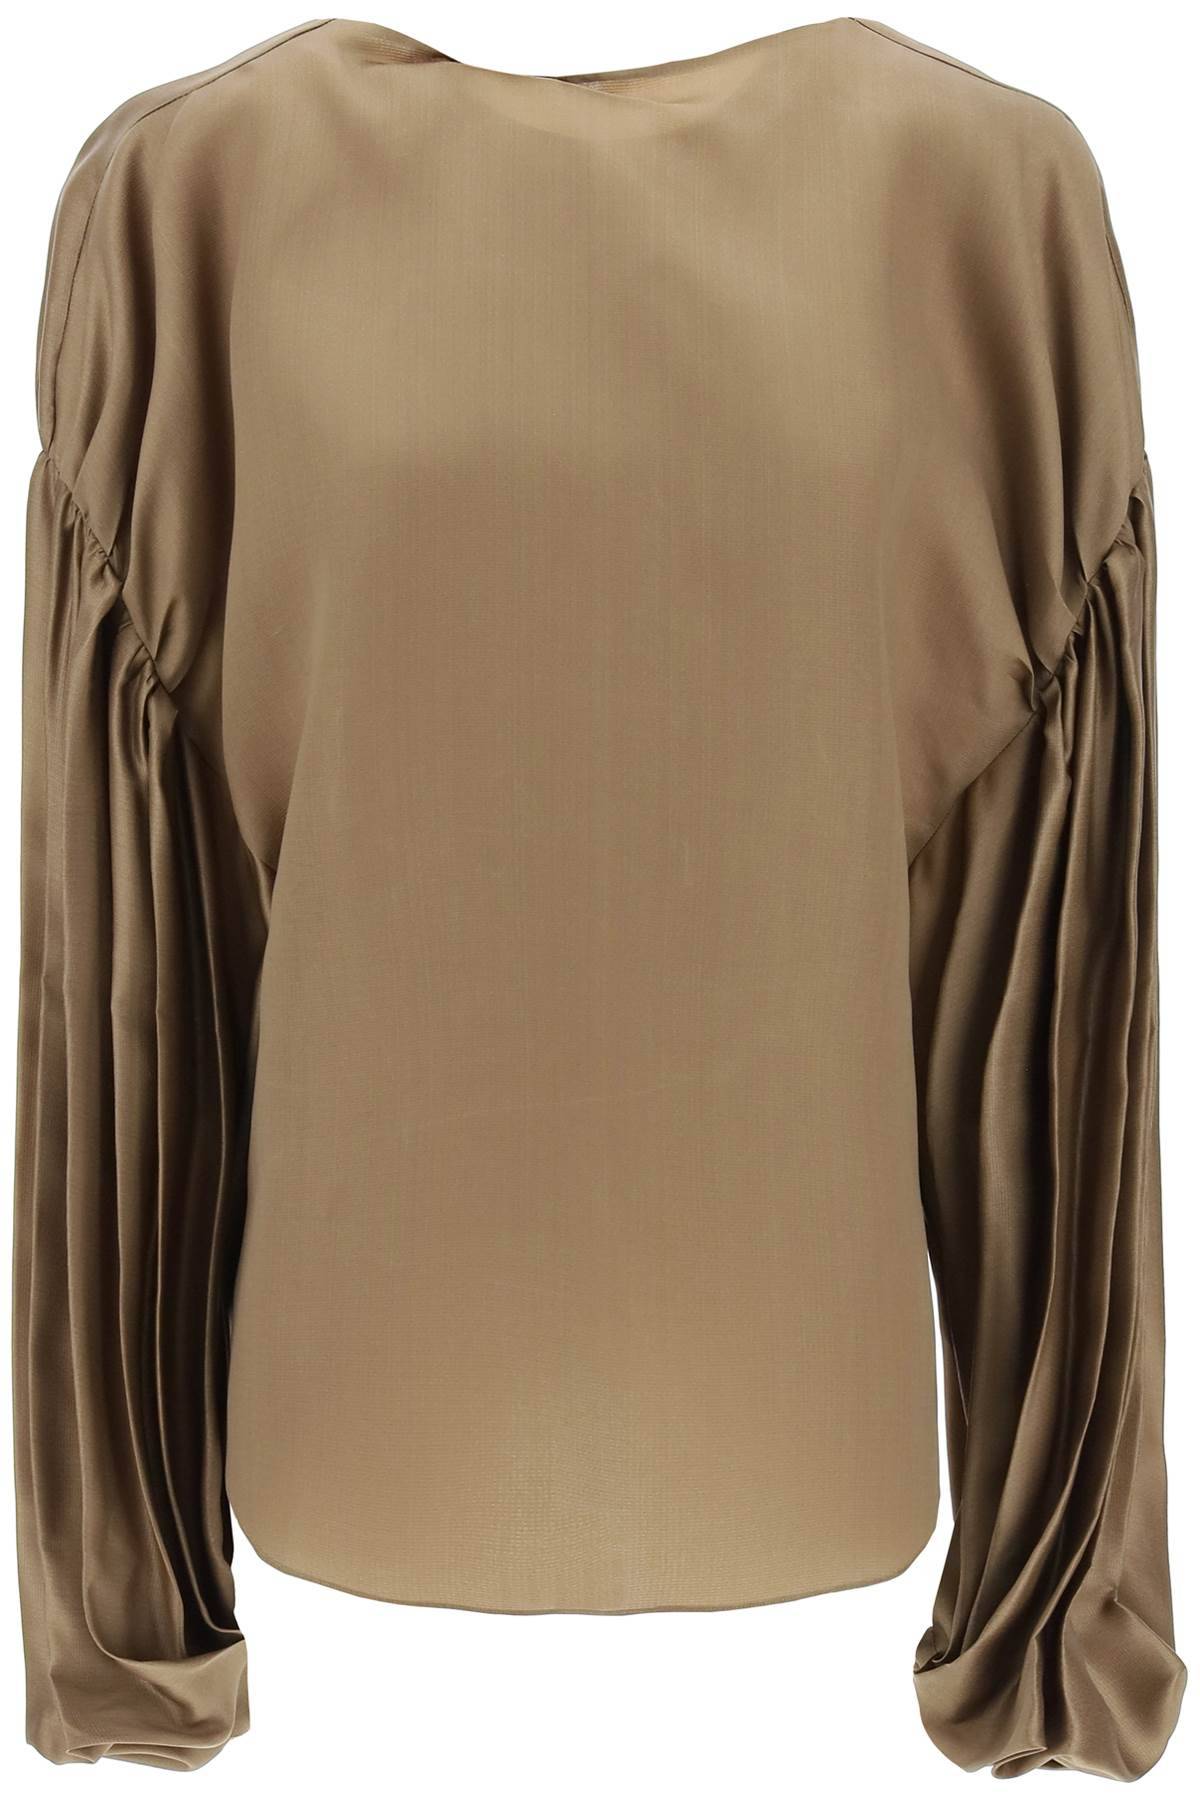 Khaite KHAITE "quico blouse with puffed sleeves